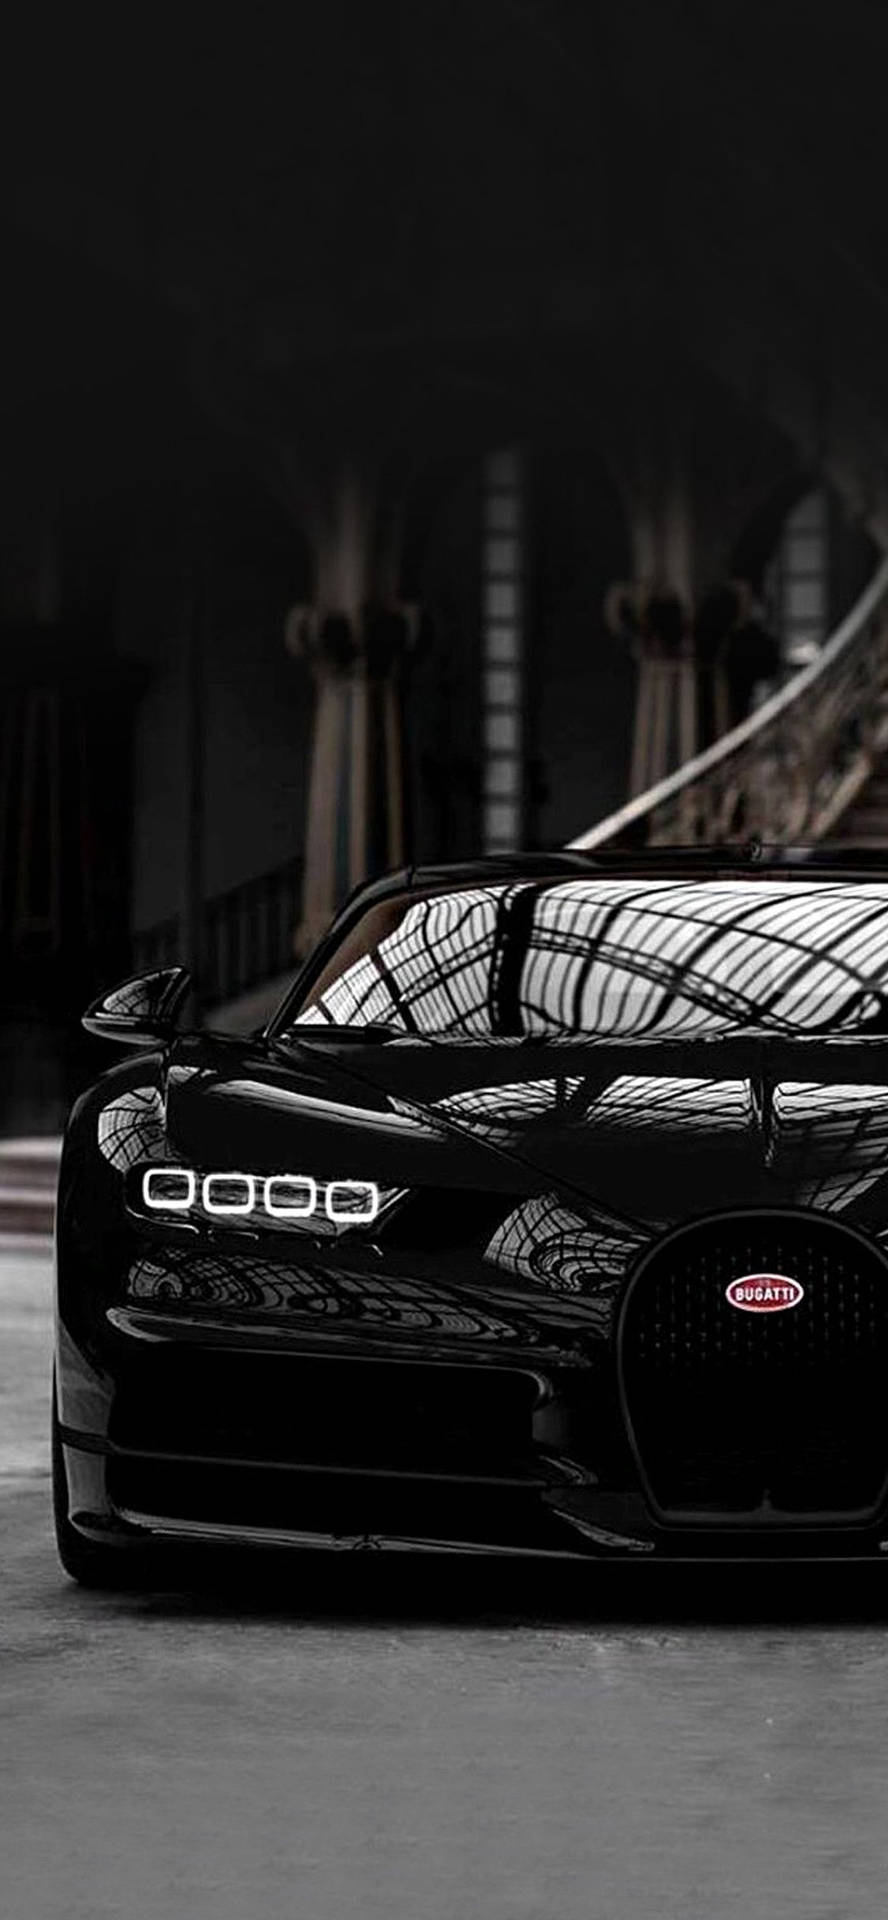 Black Bugatti Chiron Car Iphone Background